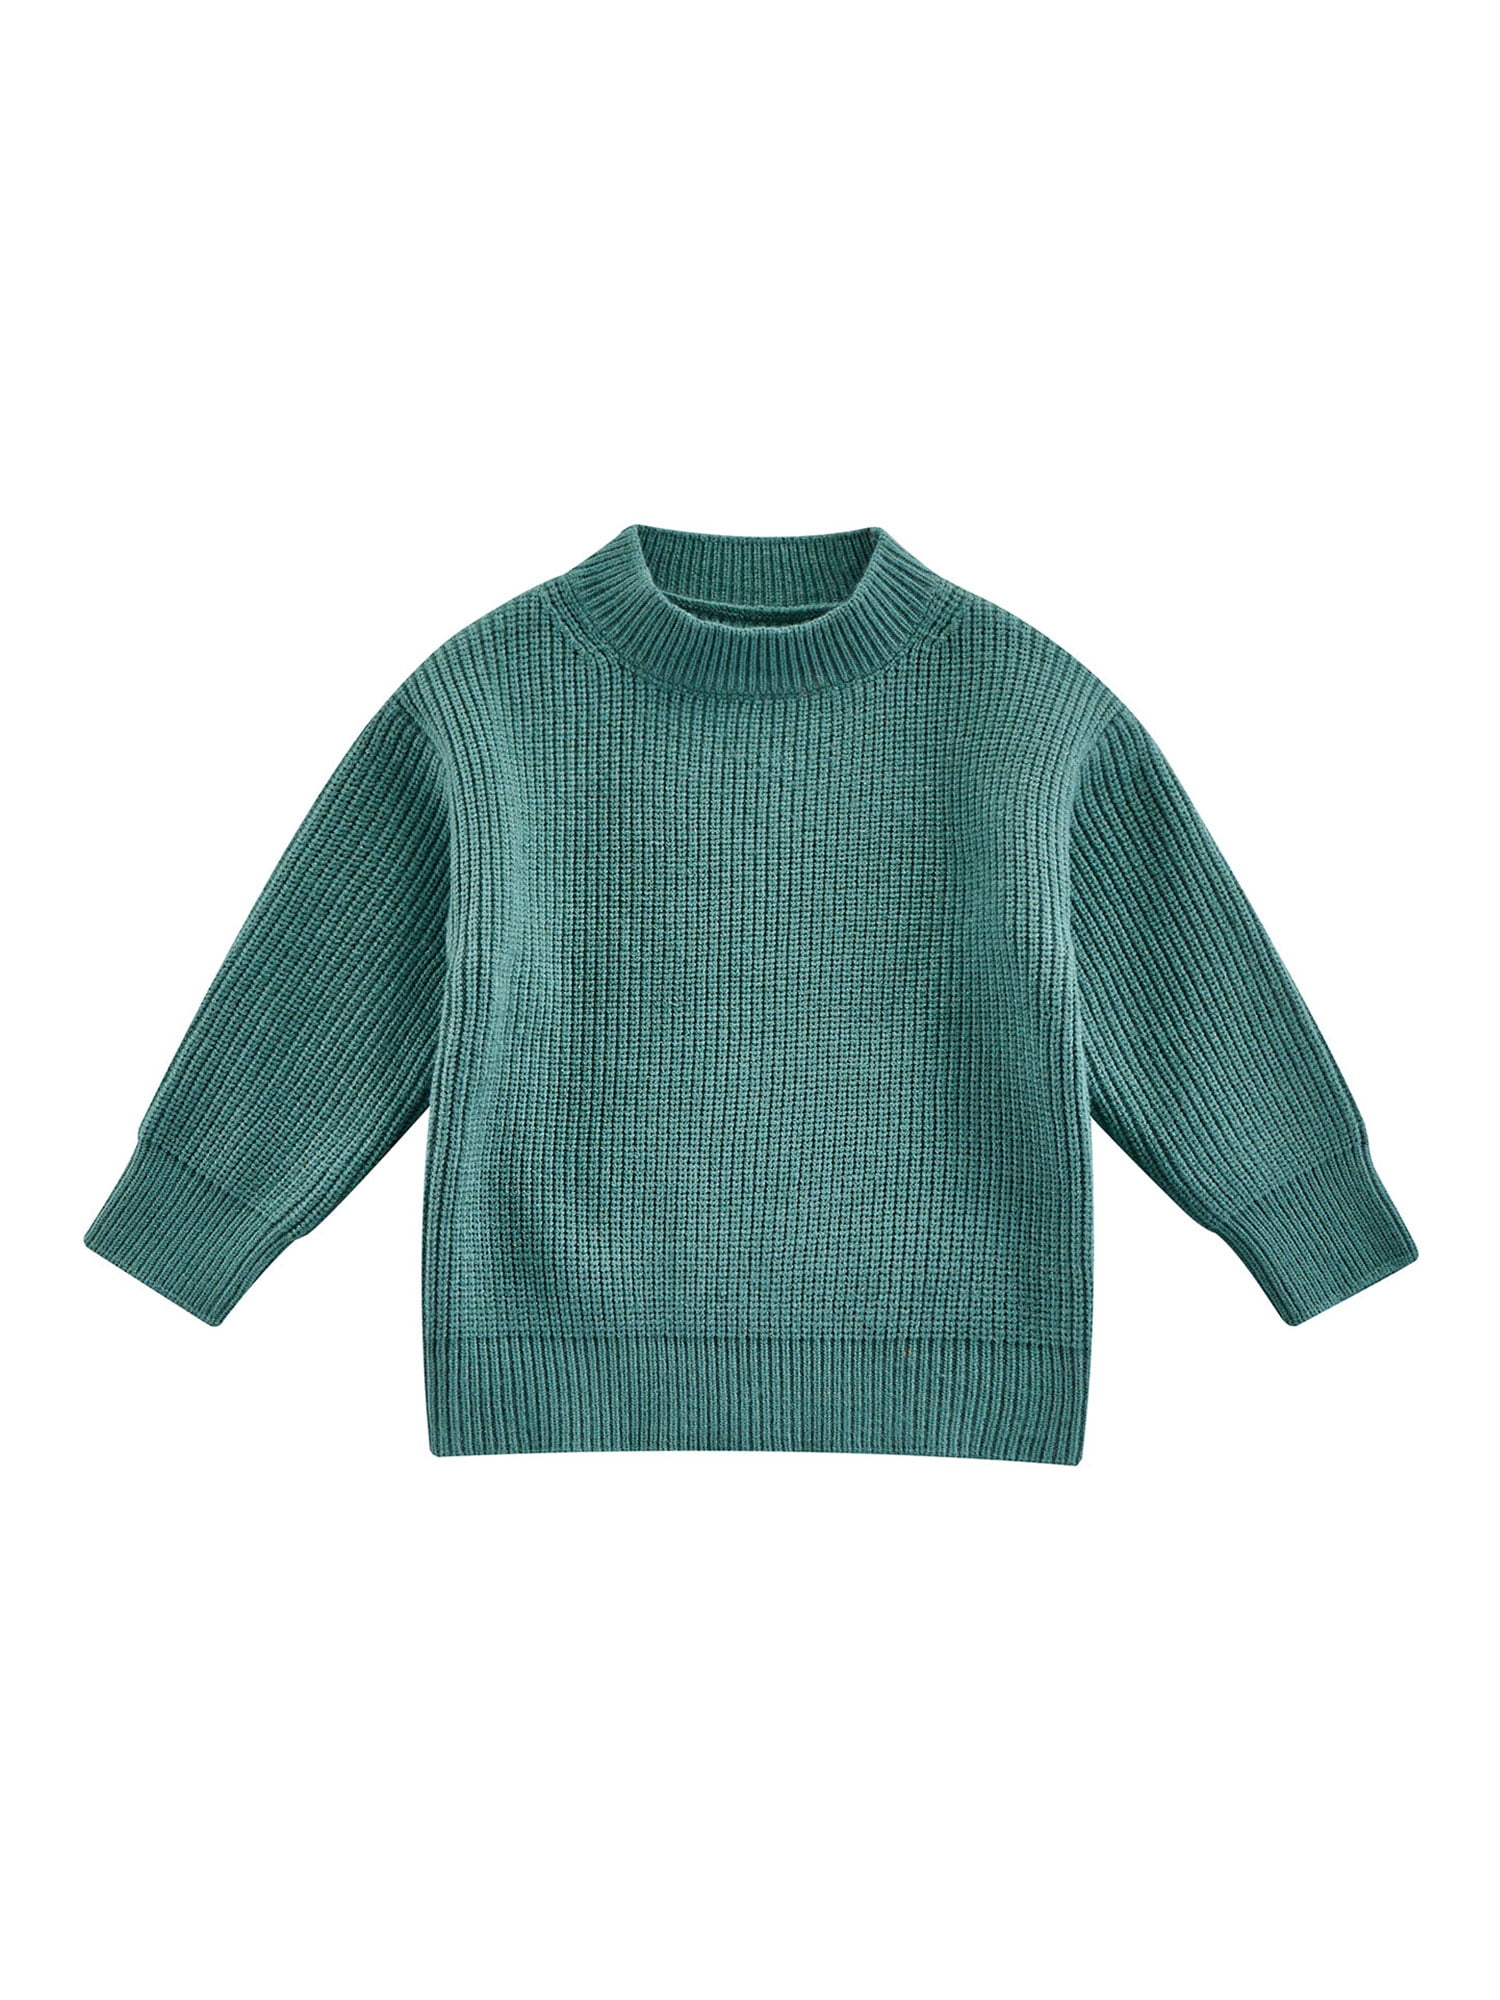 MT-Pste Mens Black Letter Print Knit Top Long Sleeve Jumper Soft Sweater 